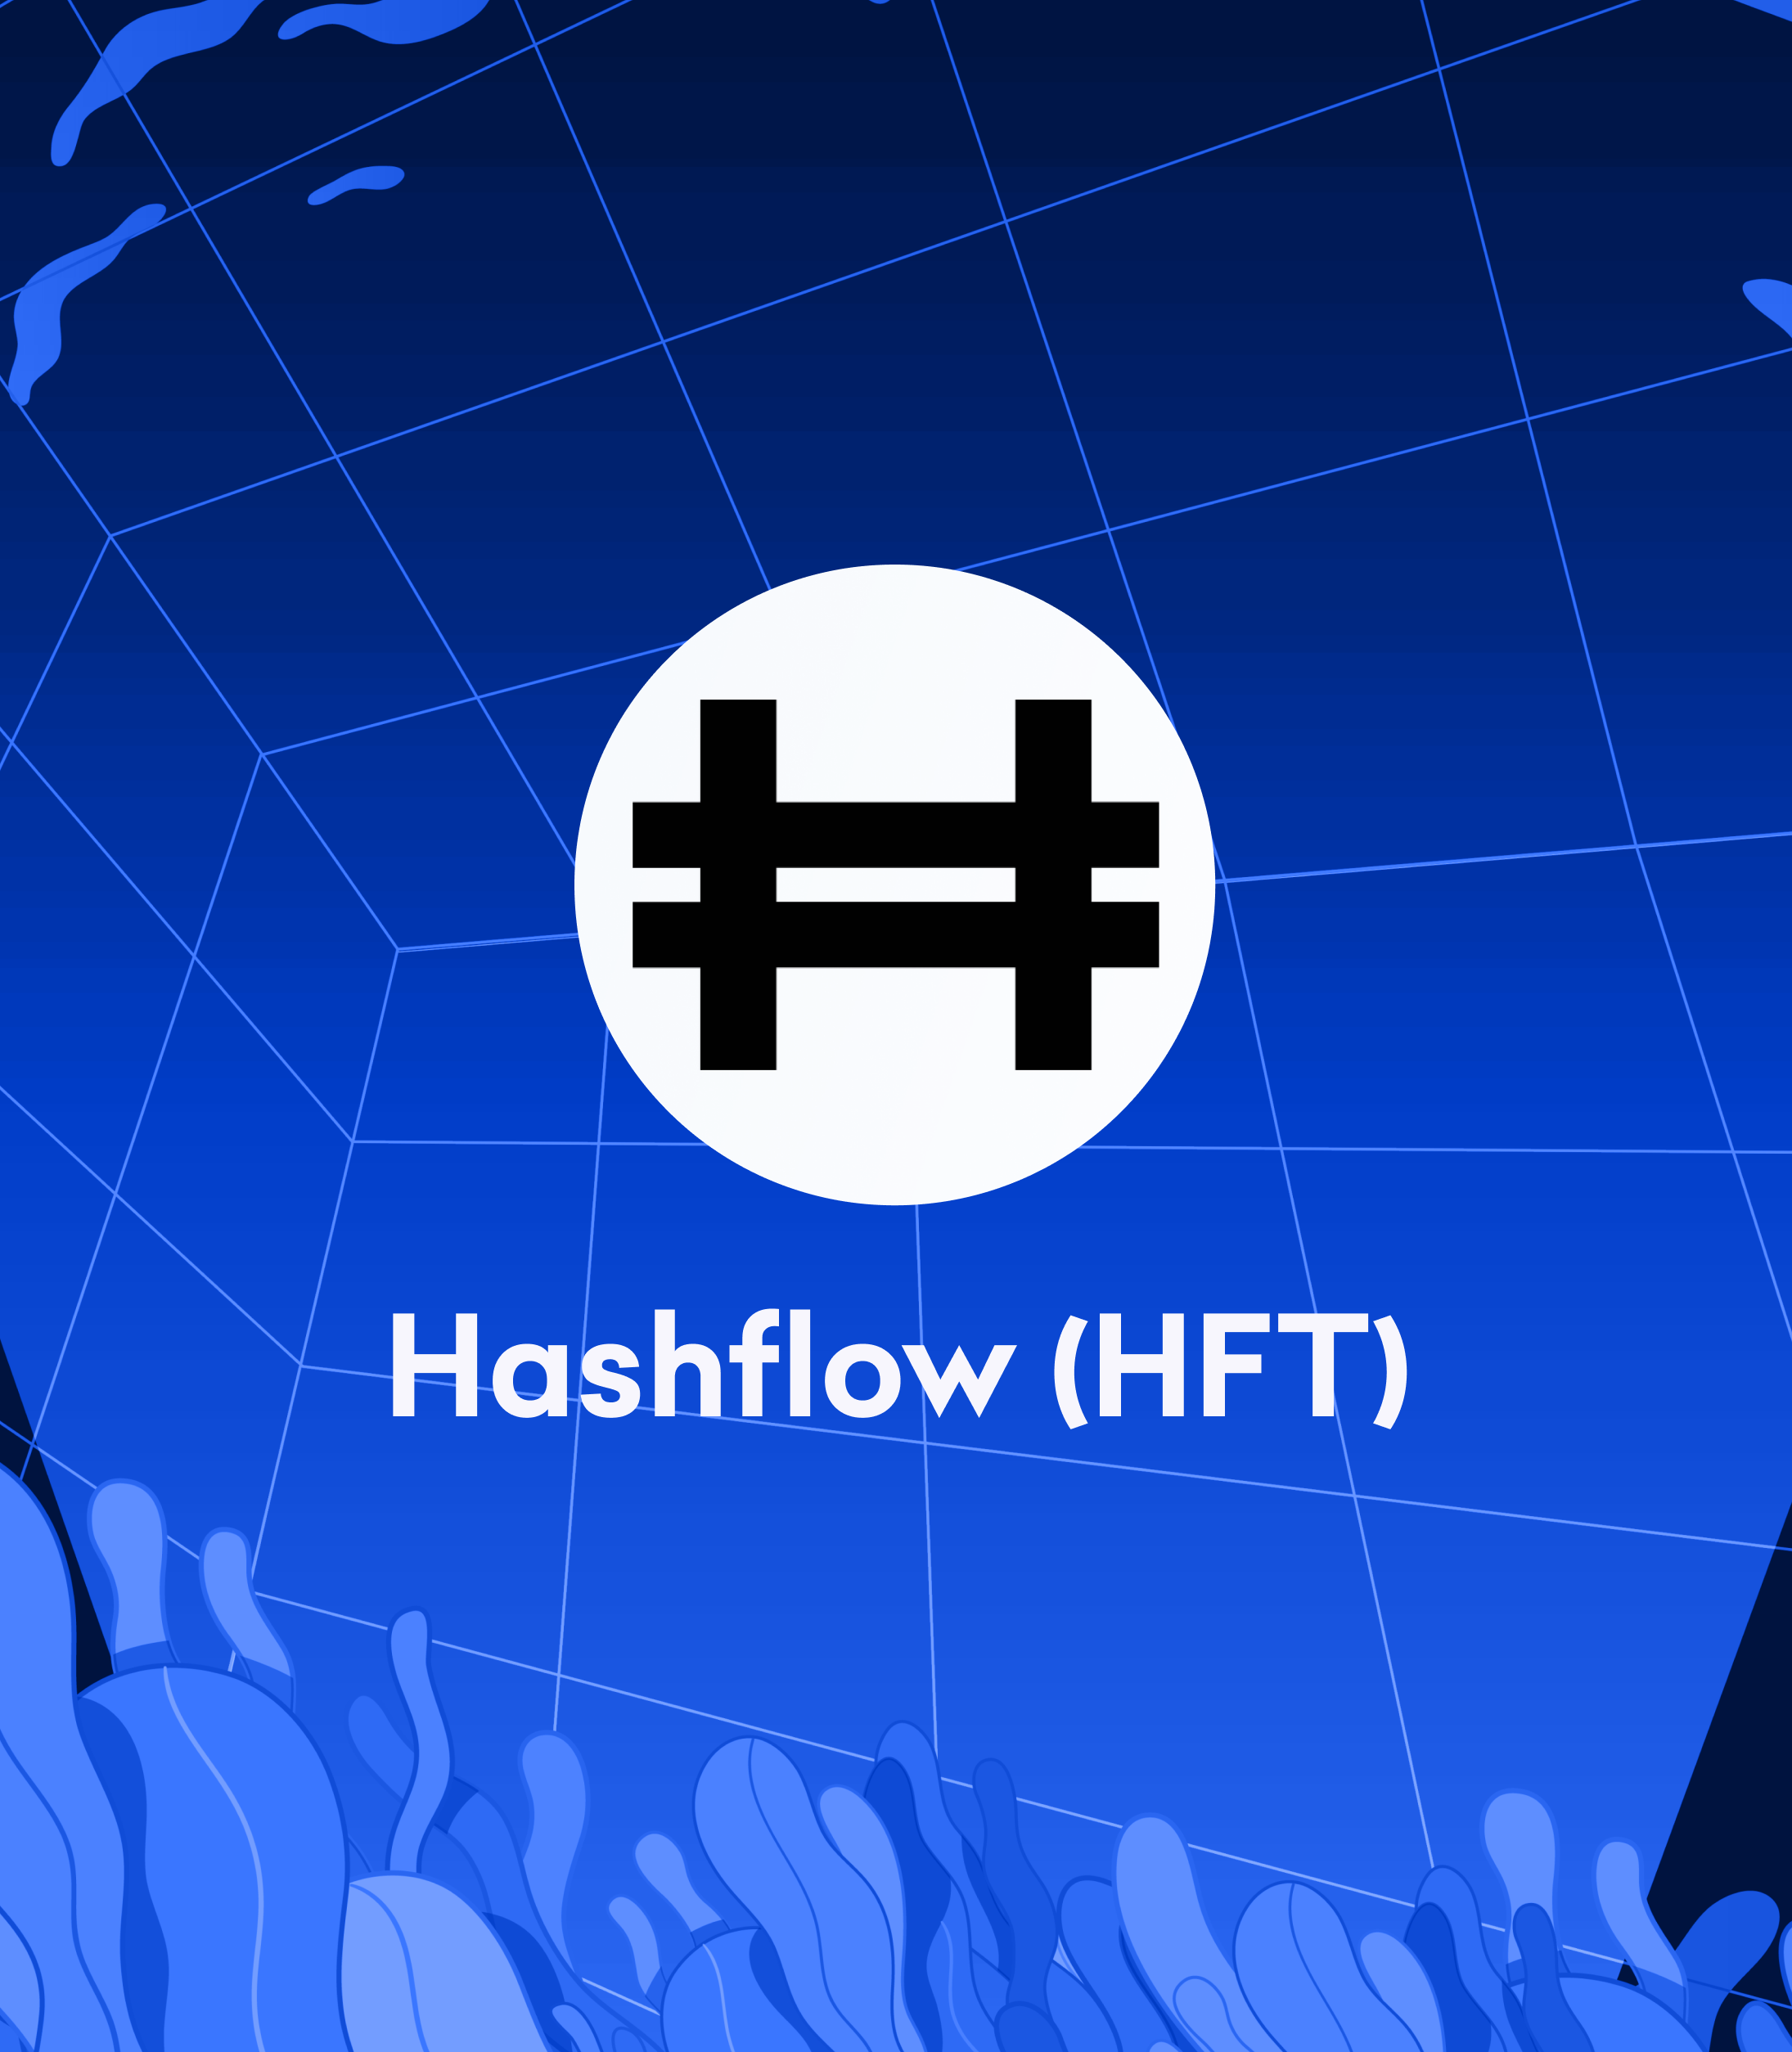 "Hashflow: Futuro prometedor"